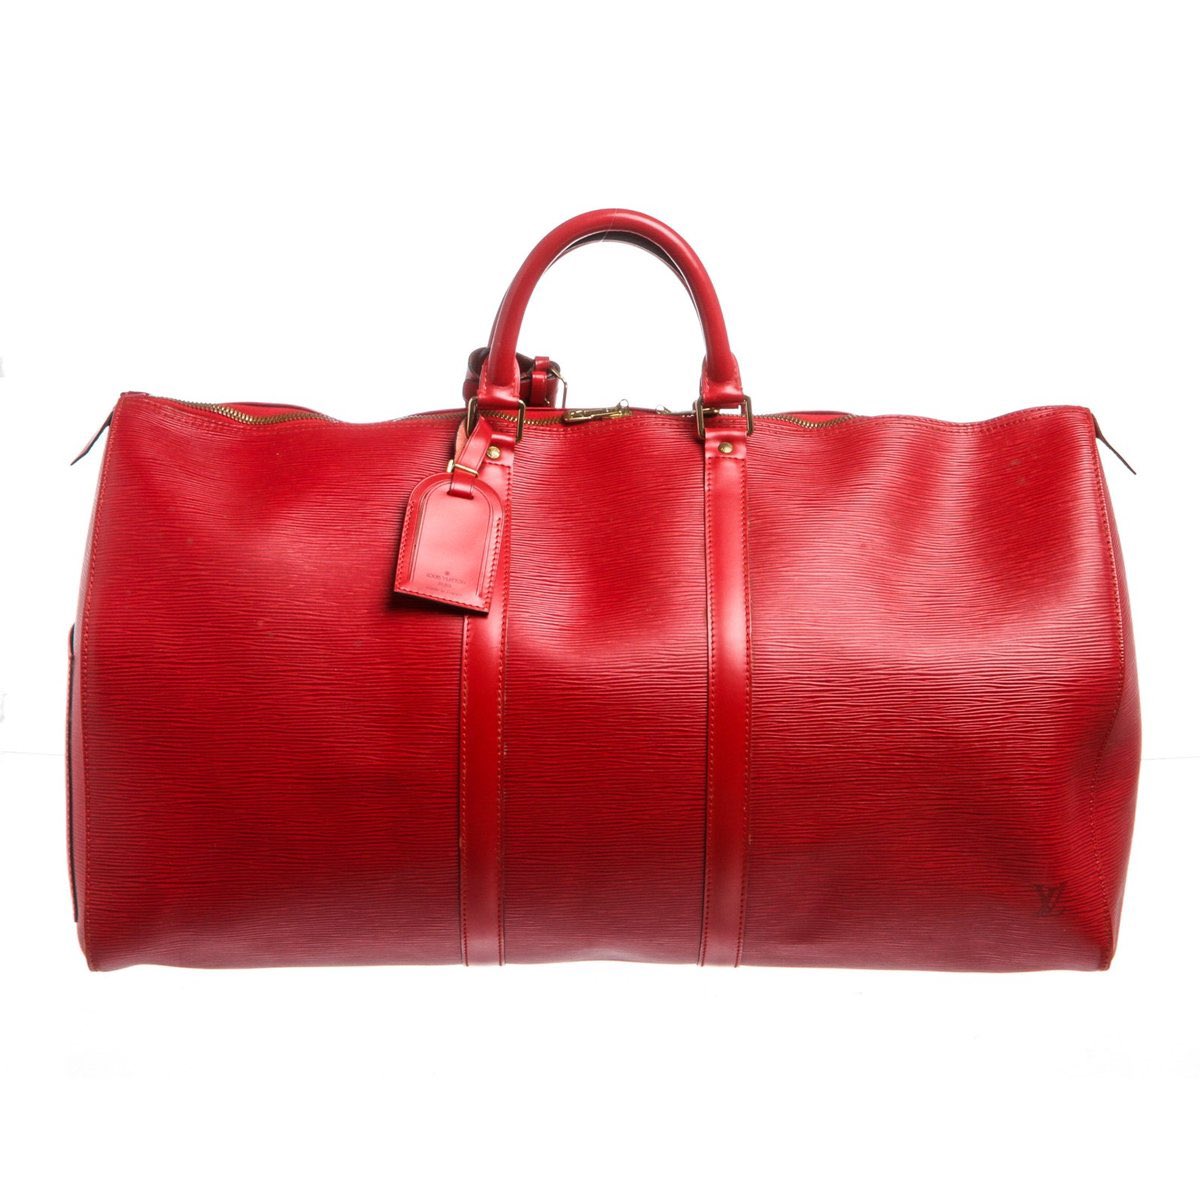 LOUIS VUITTON
Louis Vuitton Red Epi Leather Keepall 55 cm Duffle Bag Luggage #lvbags #lvred #overnightbag #jetsetter #weekenderbag #louisvuittonbag #designerbagsforless #buyboujee #buyboujeedeals